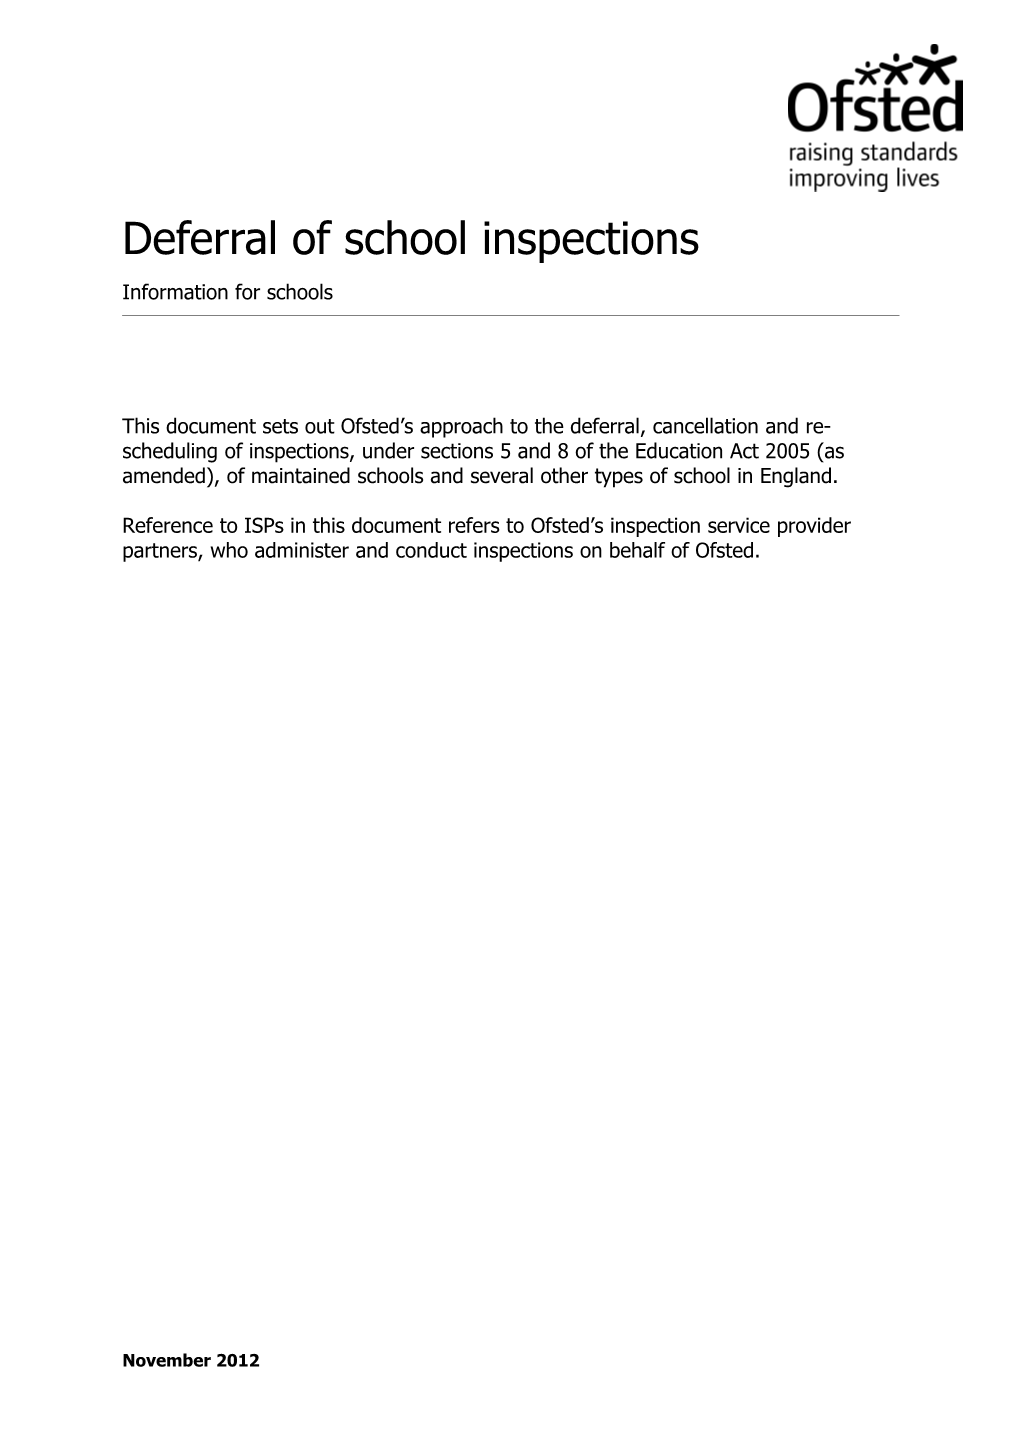 Deferral of School Inspections